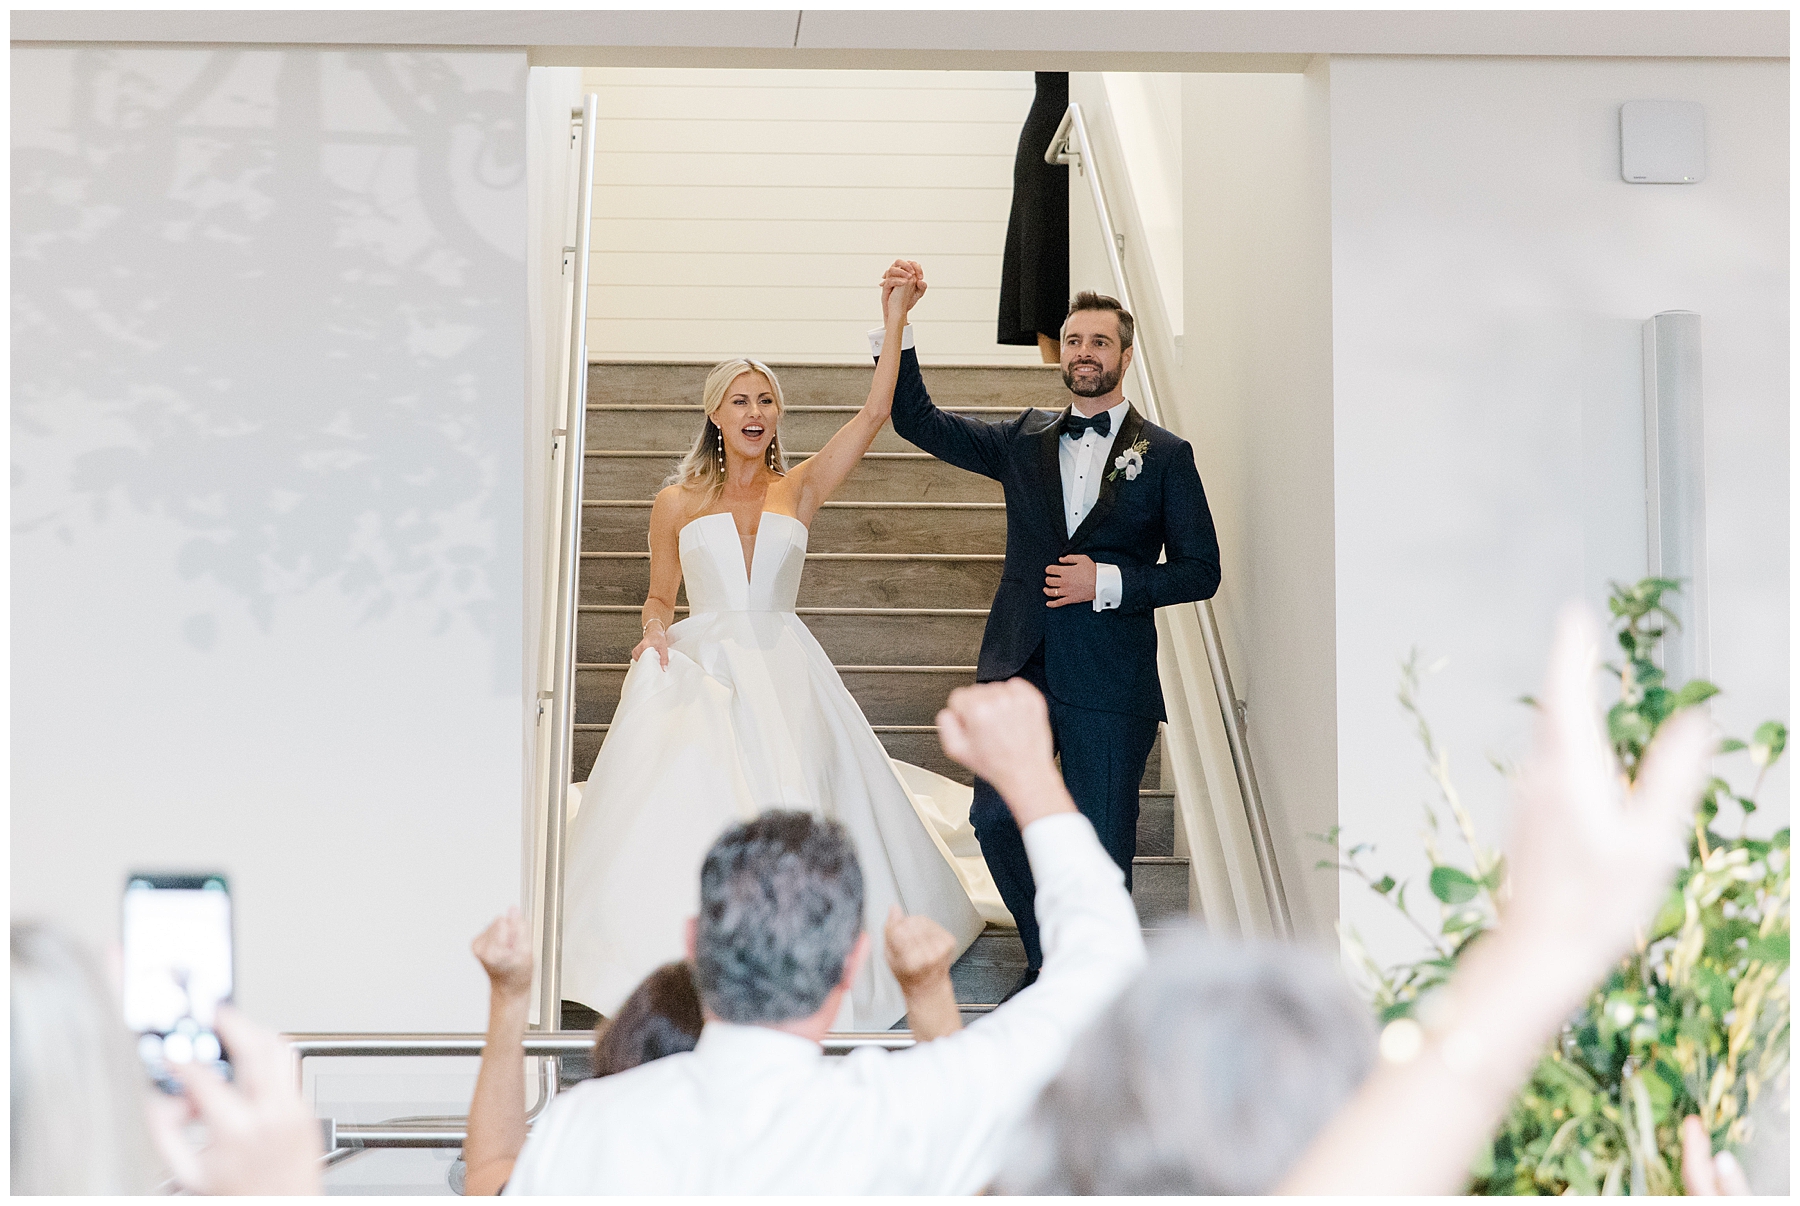 newlyweds grand entrance to reception at Pelham House Resort